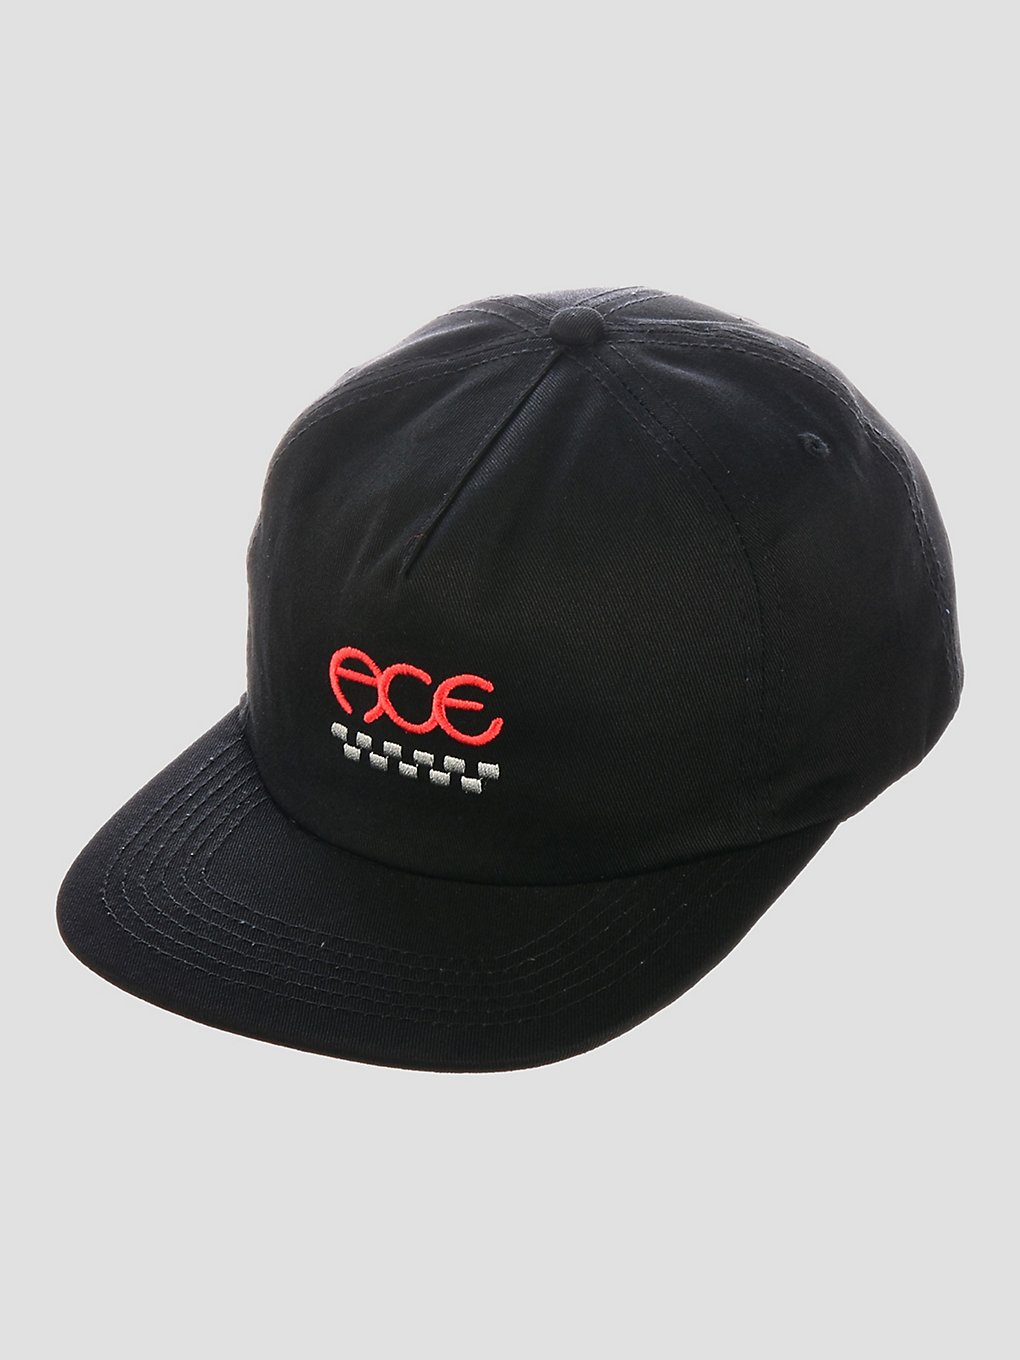 Ace Finish Cap black kaufen